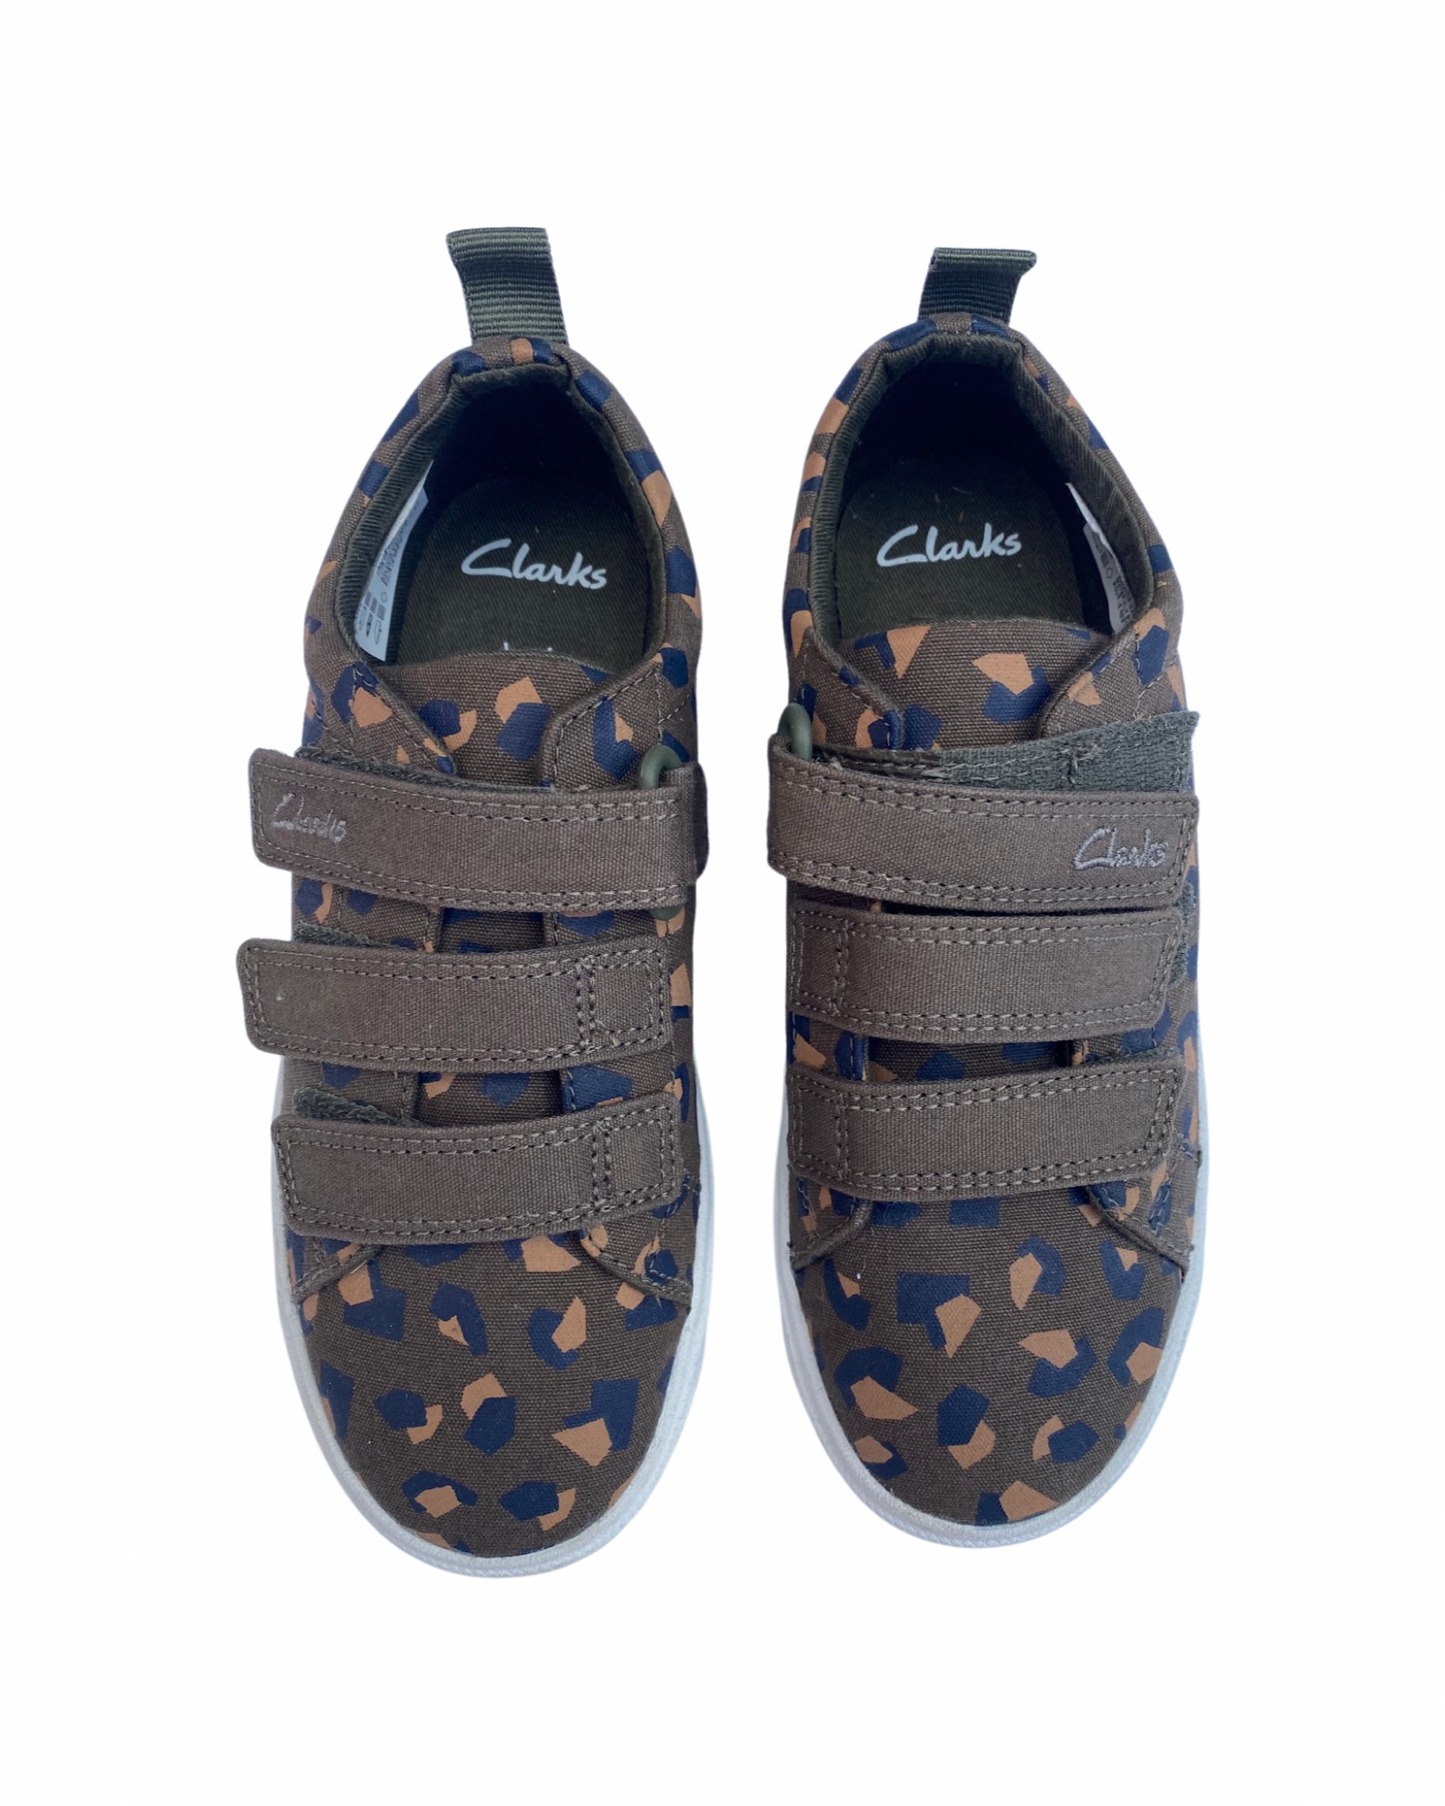 Clarks camo print double strap trainers (size UK13F/EU32)